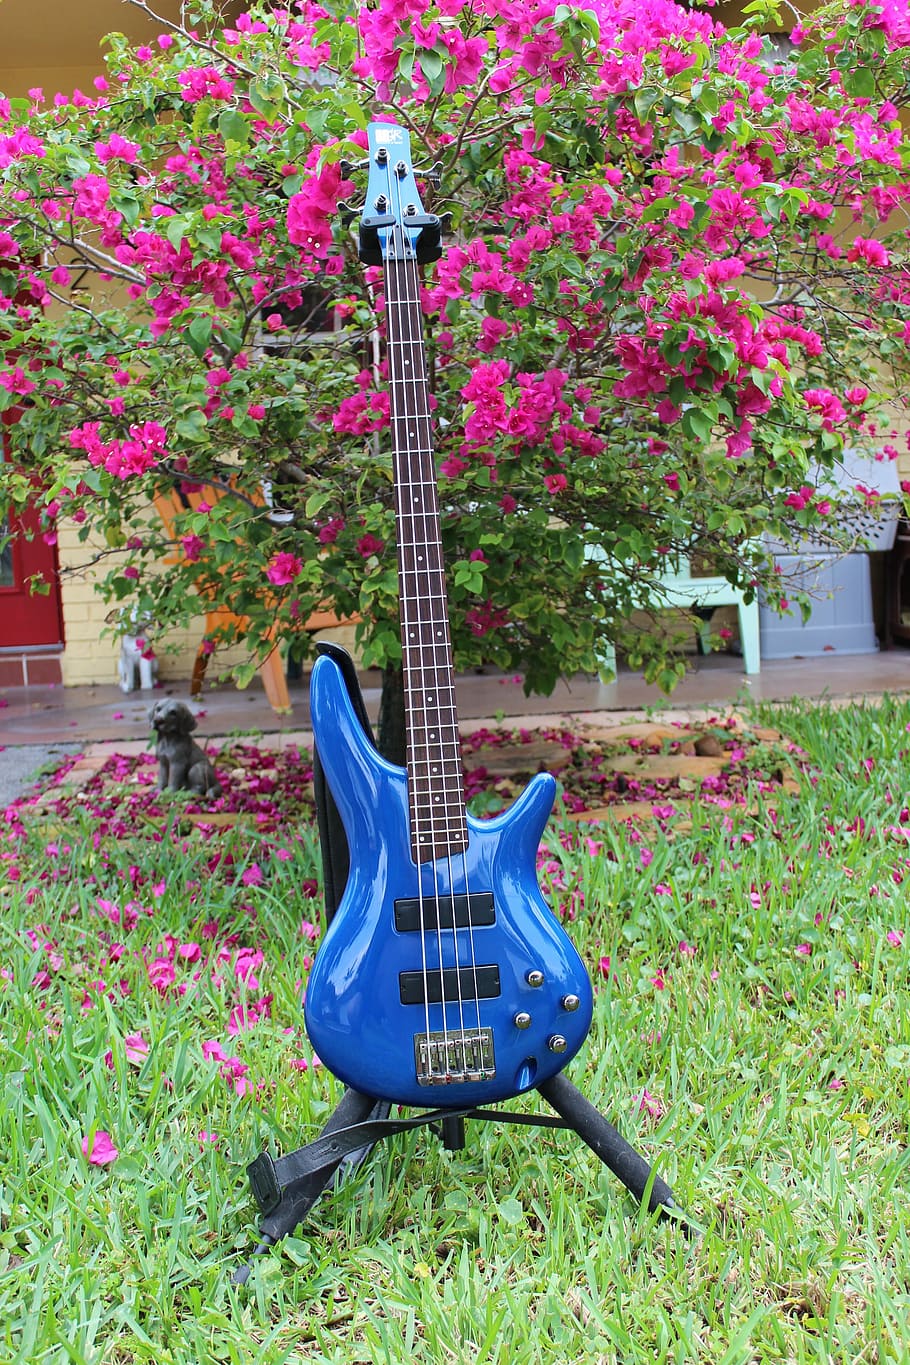 Blue Guitar, Electric Guitar, music, instrument, musical, musician